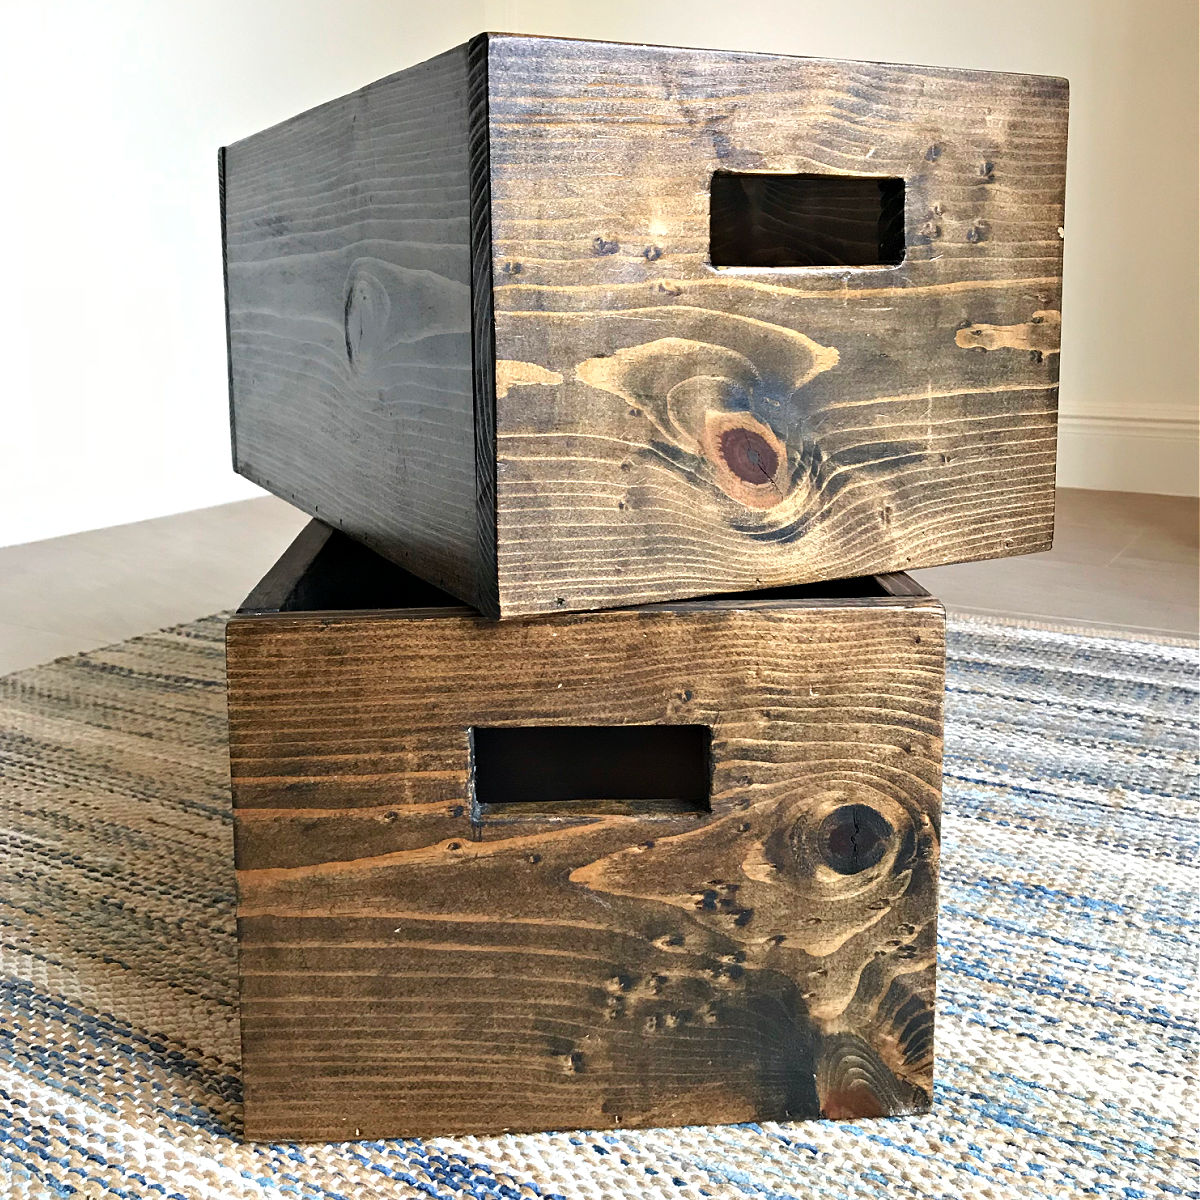 How to Make A Super Easy DIY Wood Storage Bin (Box) - Abbotts At Home